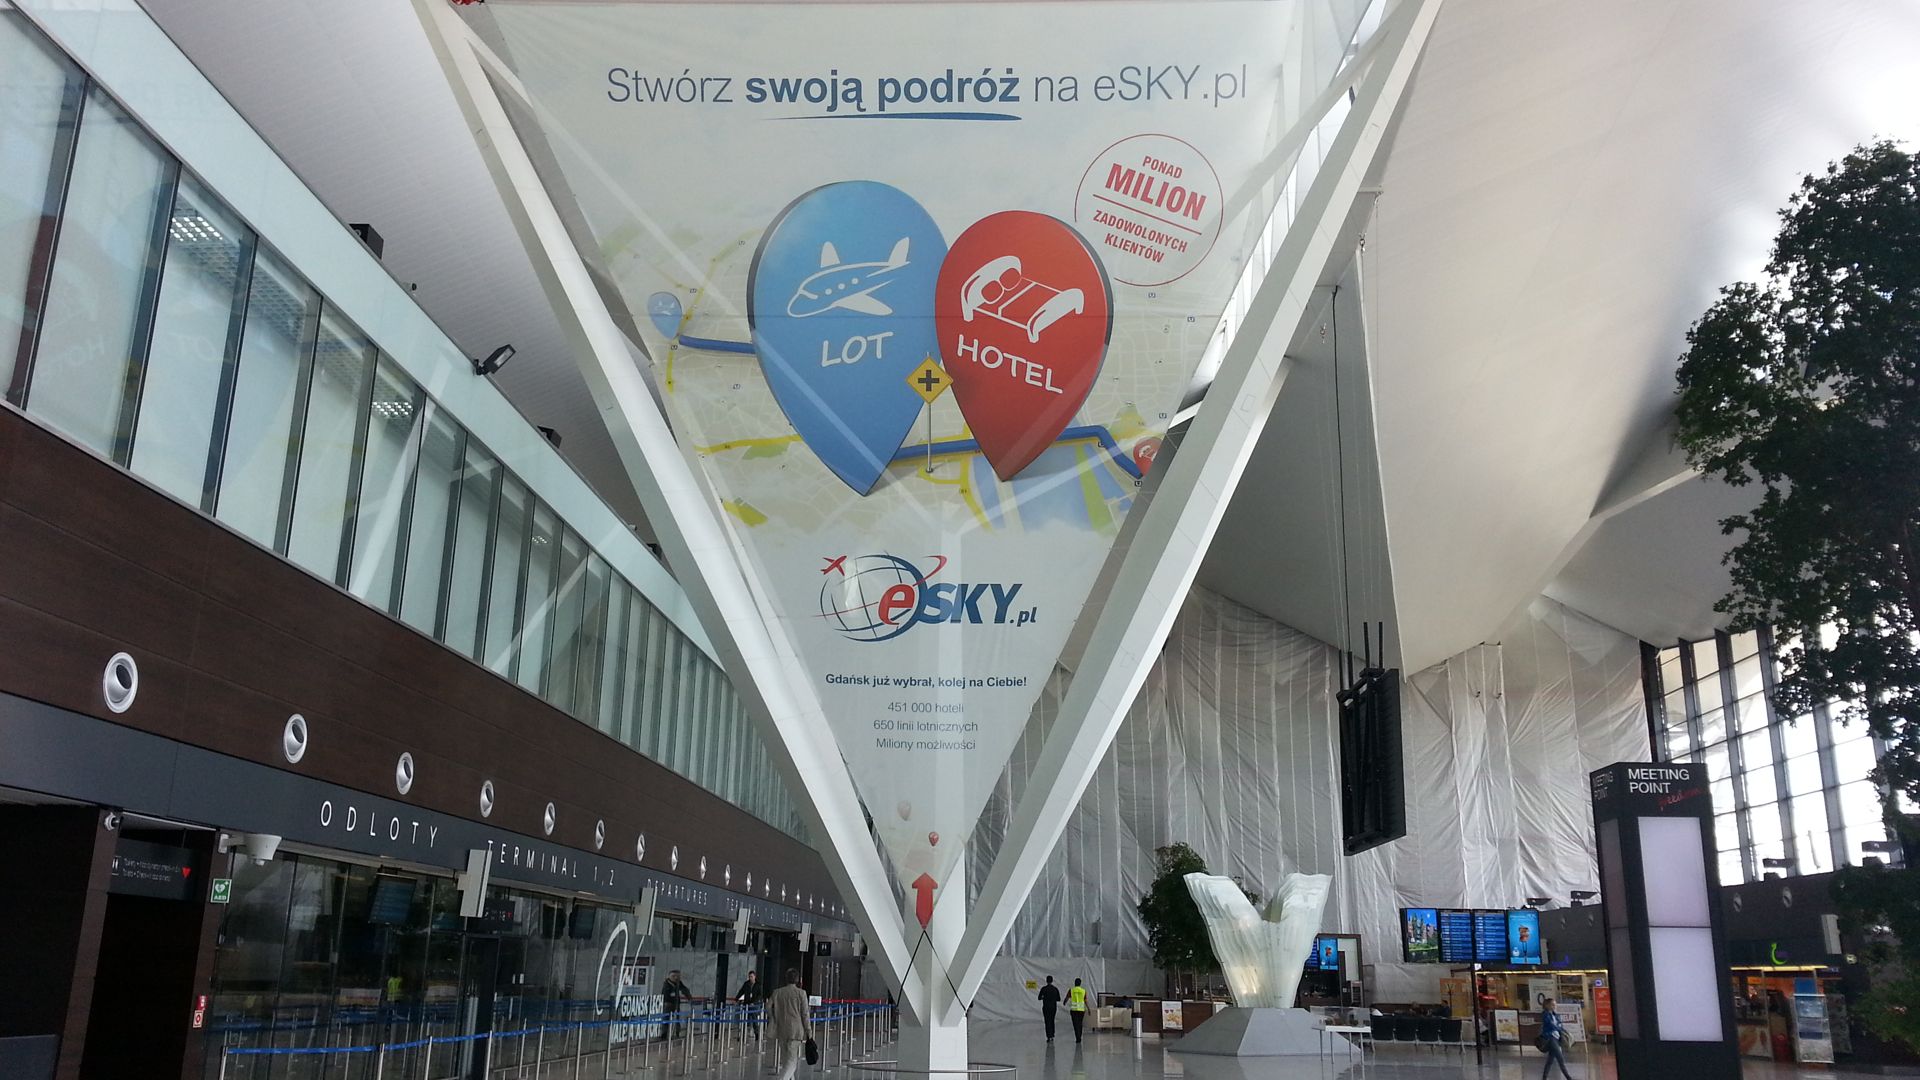 eSKY.pl reklamuje się na polskich lotniskach Podróże reklama lotniako